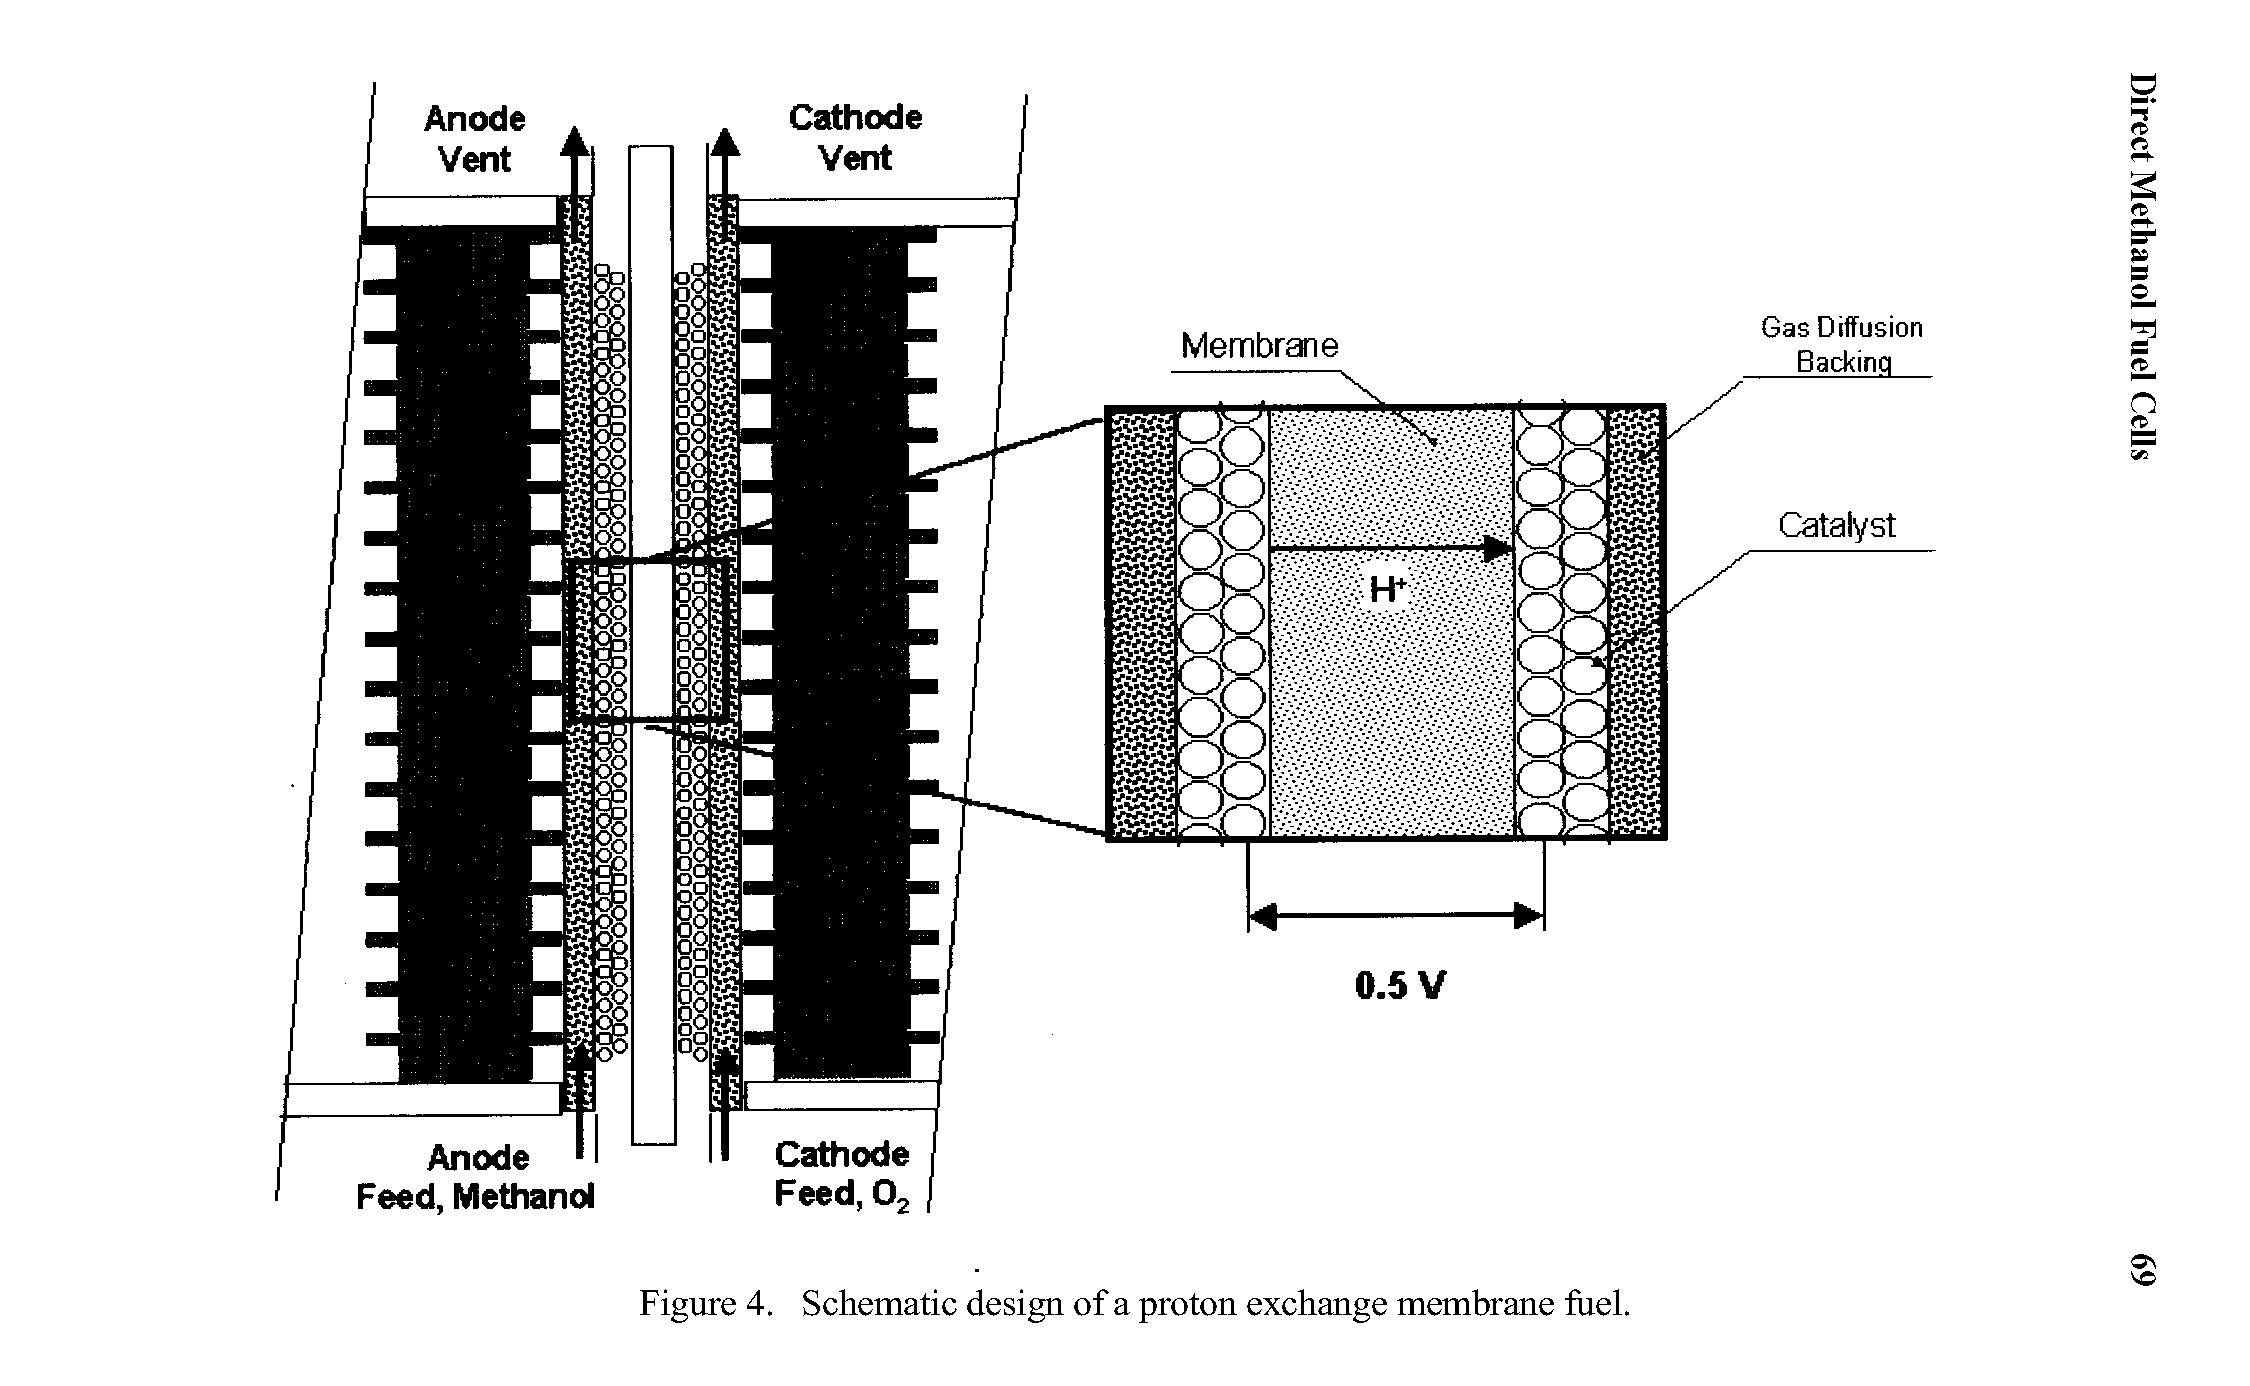 Figure 4. Schematic design of a proton exchange membrane fuel.